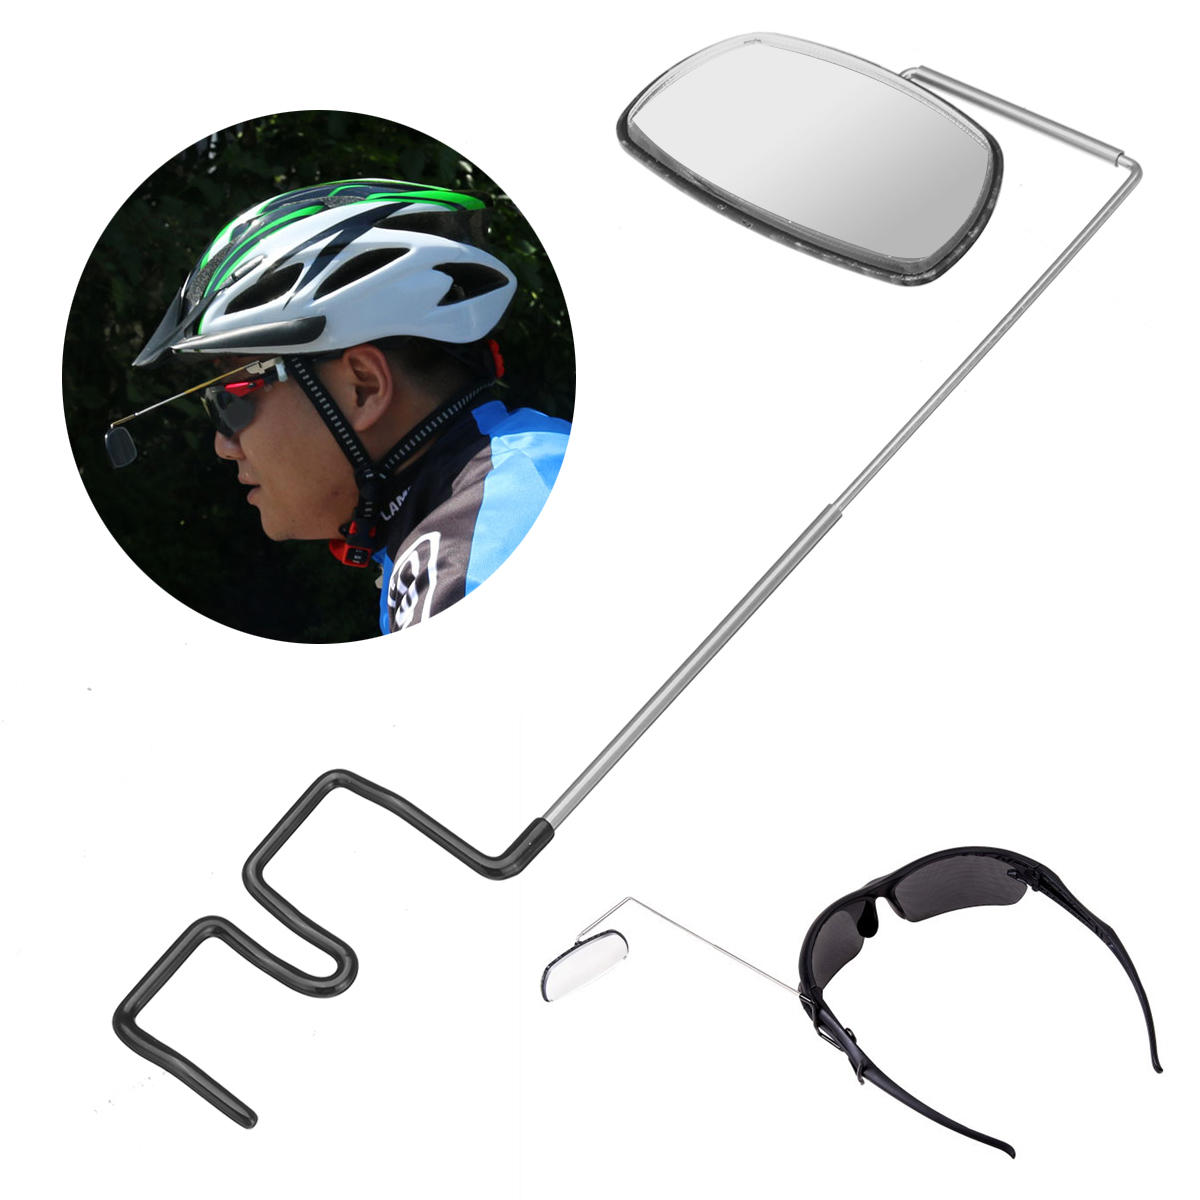 BIKIGHT aleación de aluminio ligero 360 grados bicicleta casco montar espejos retrovisores ajustables